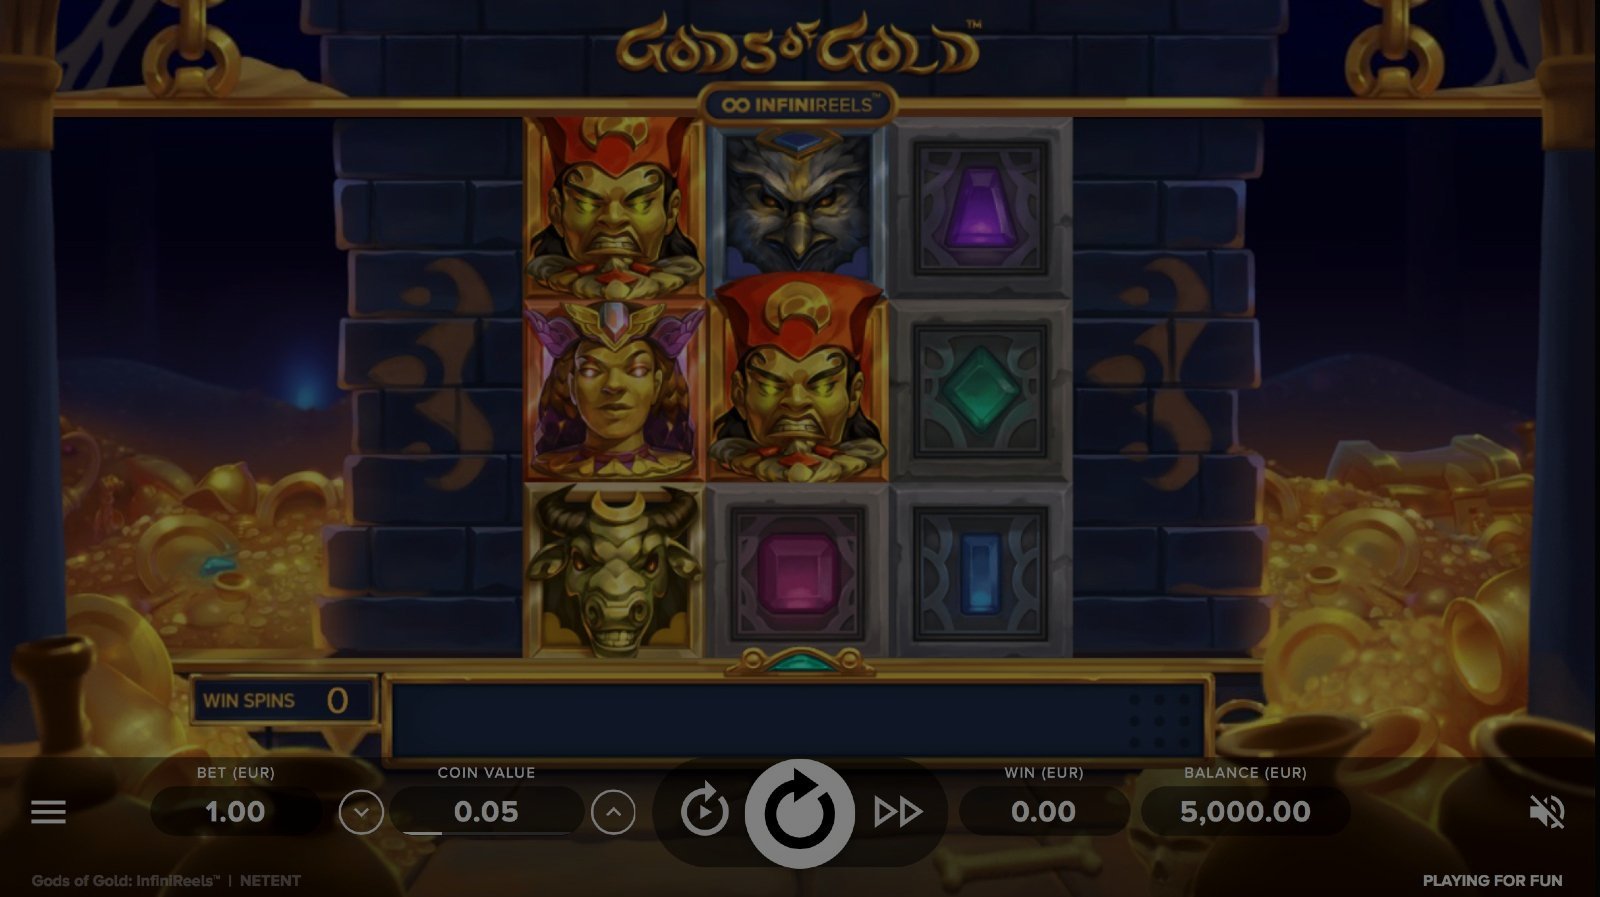 Gods of Gold INFINIREELS demo